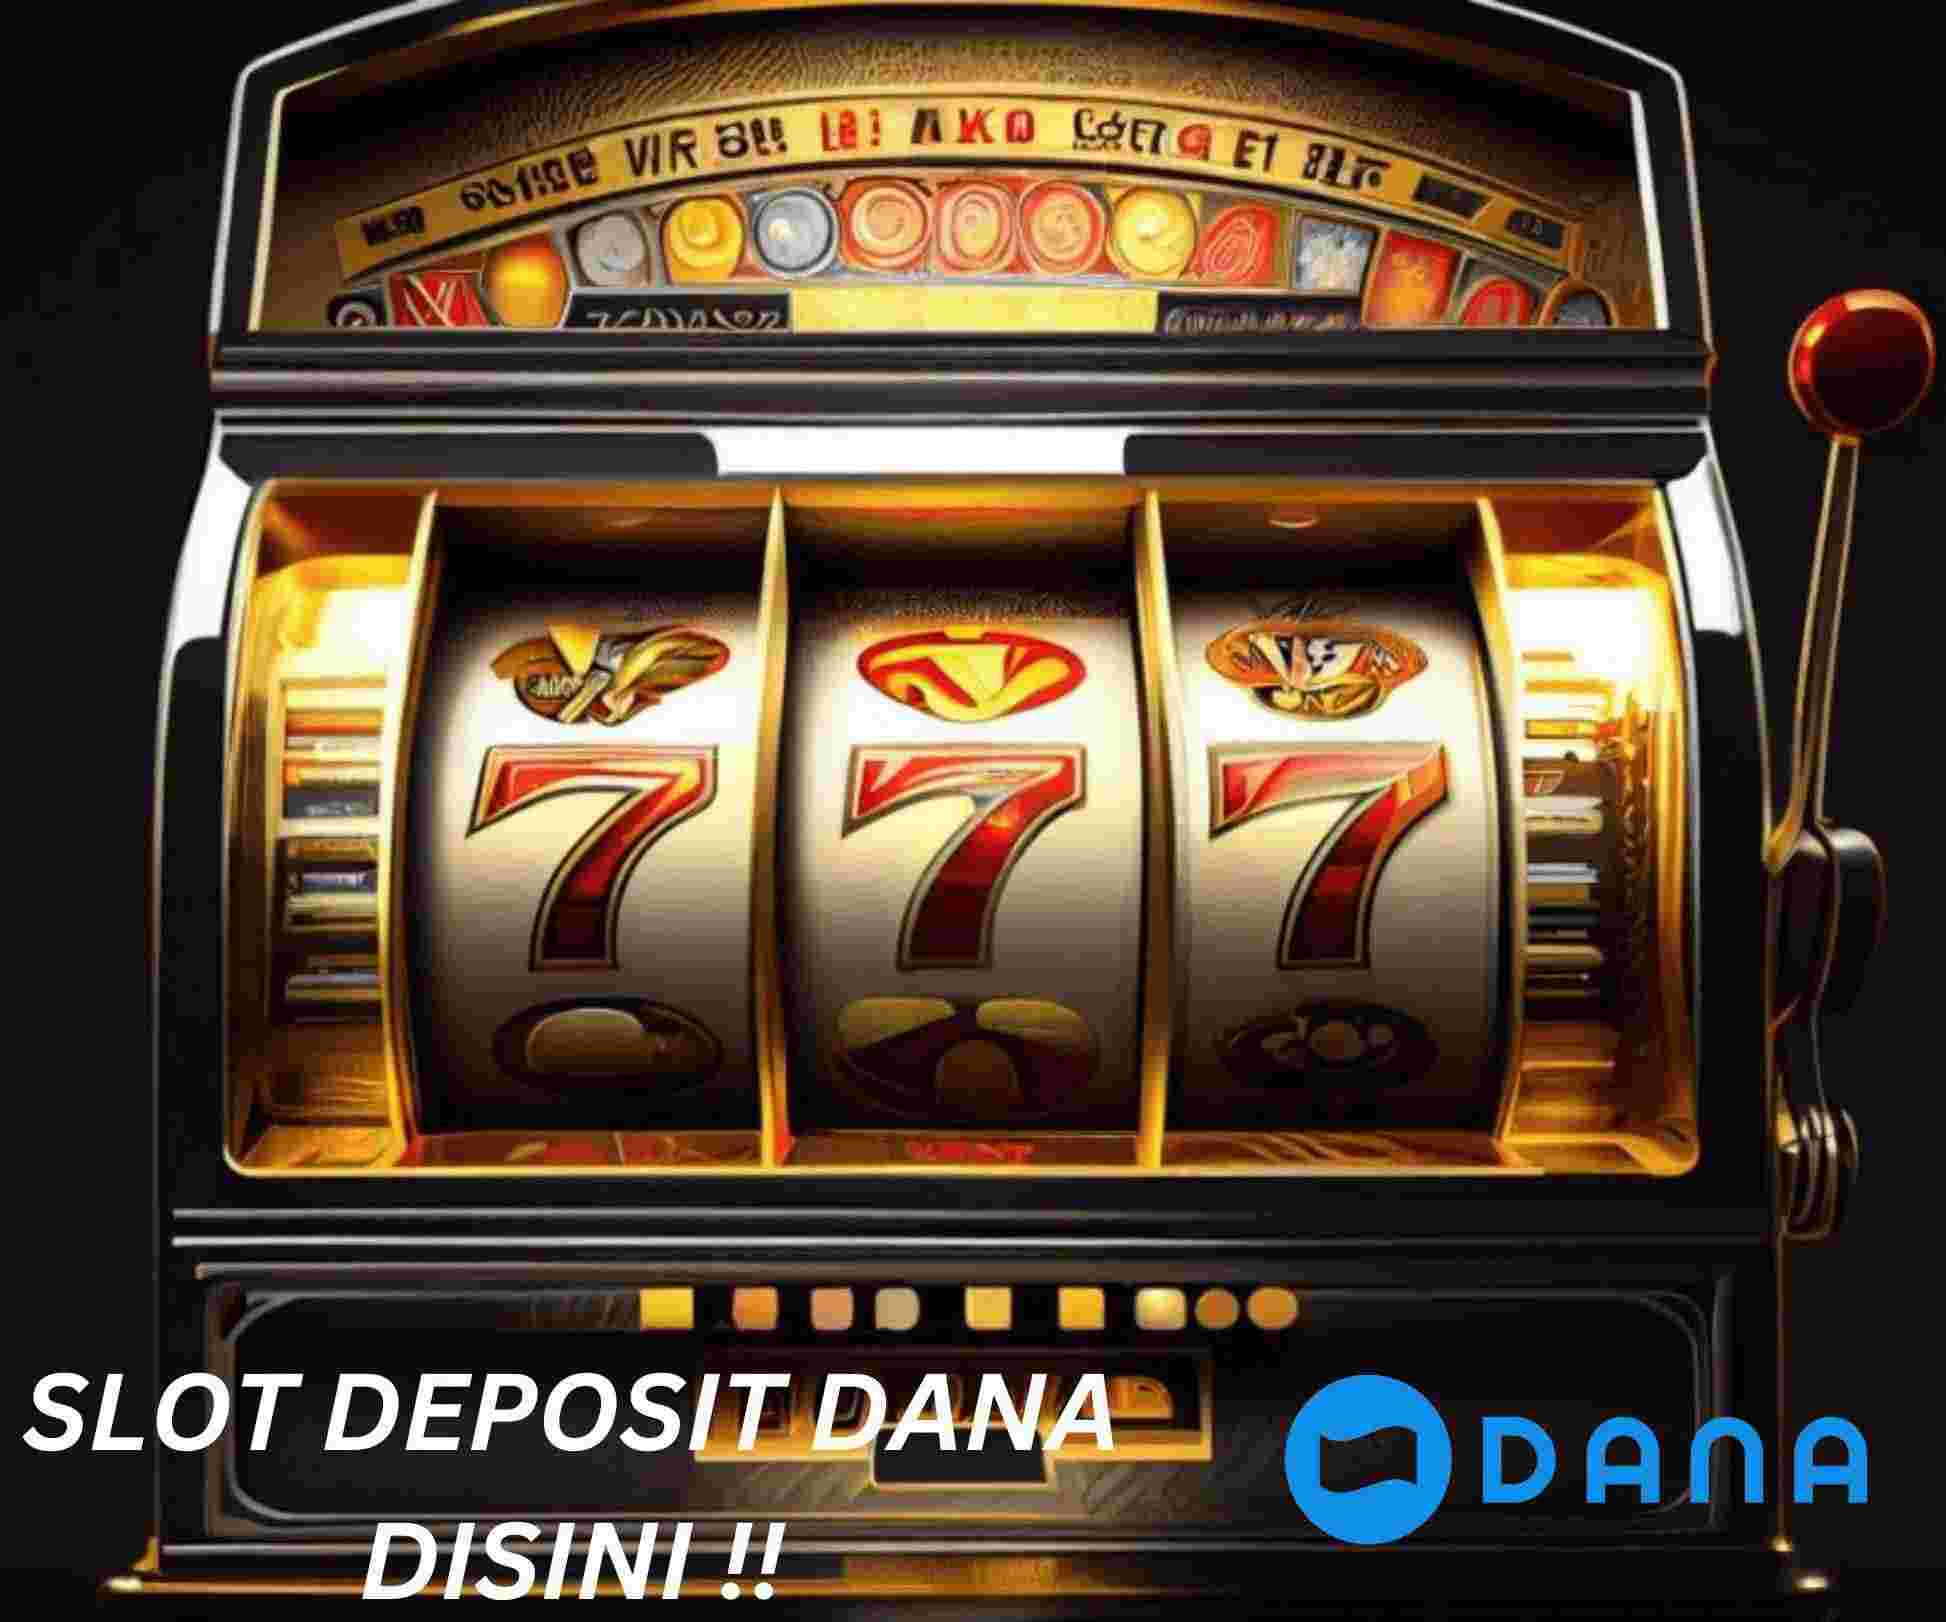 Slot dana for slot games using viral ewallet funds